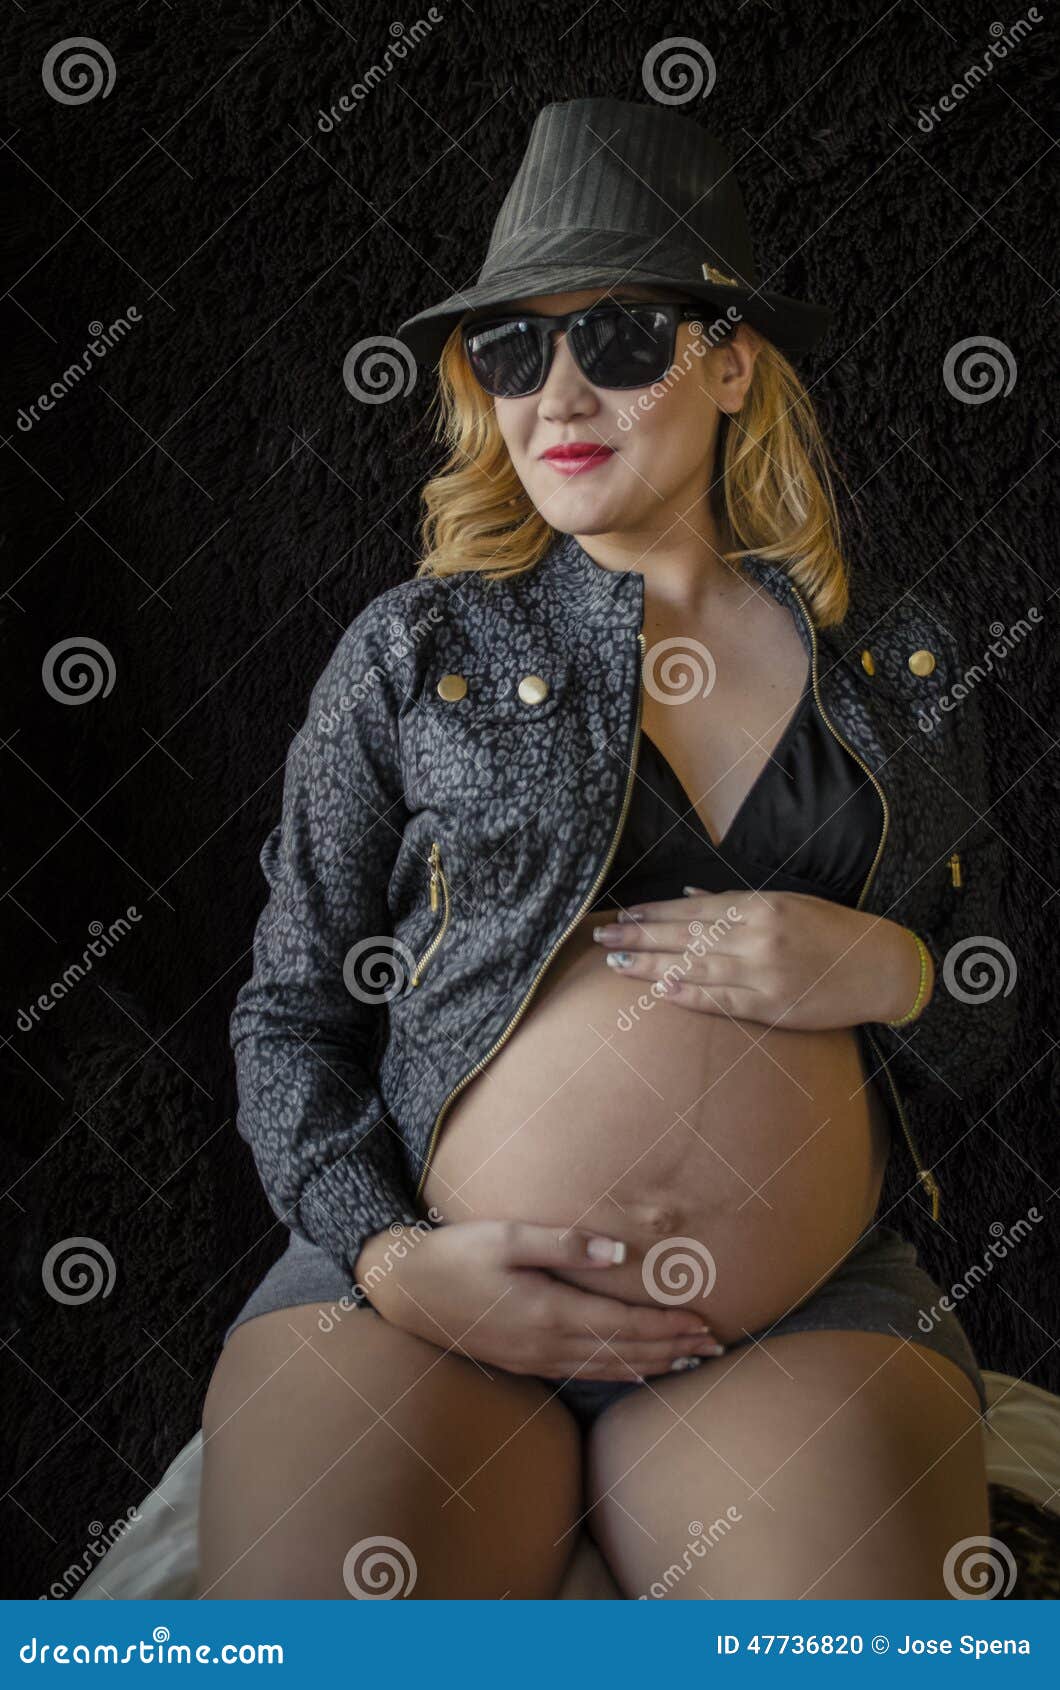 cool pregnant girl 1